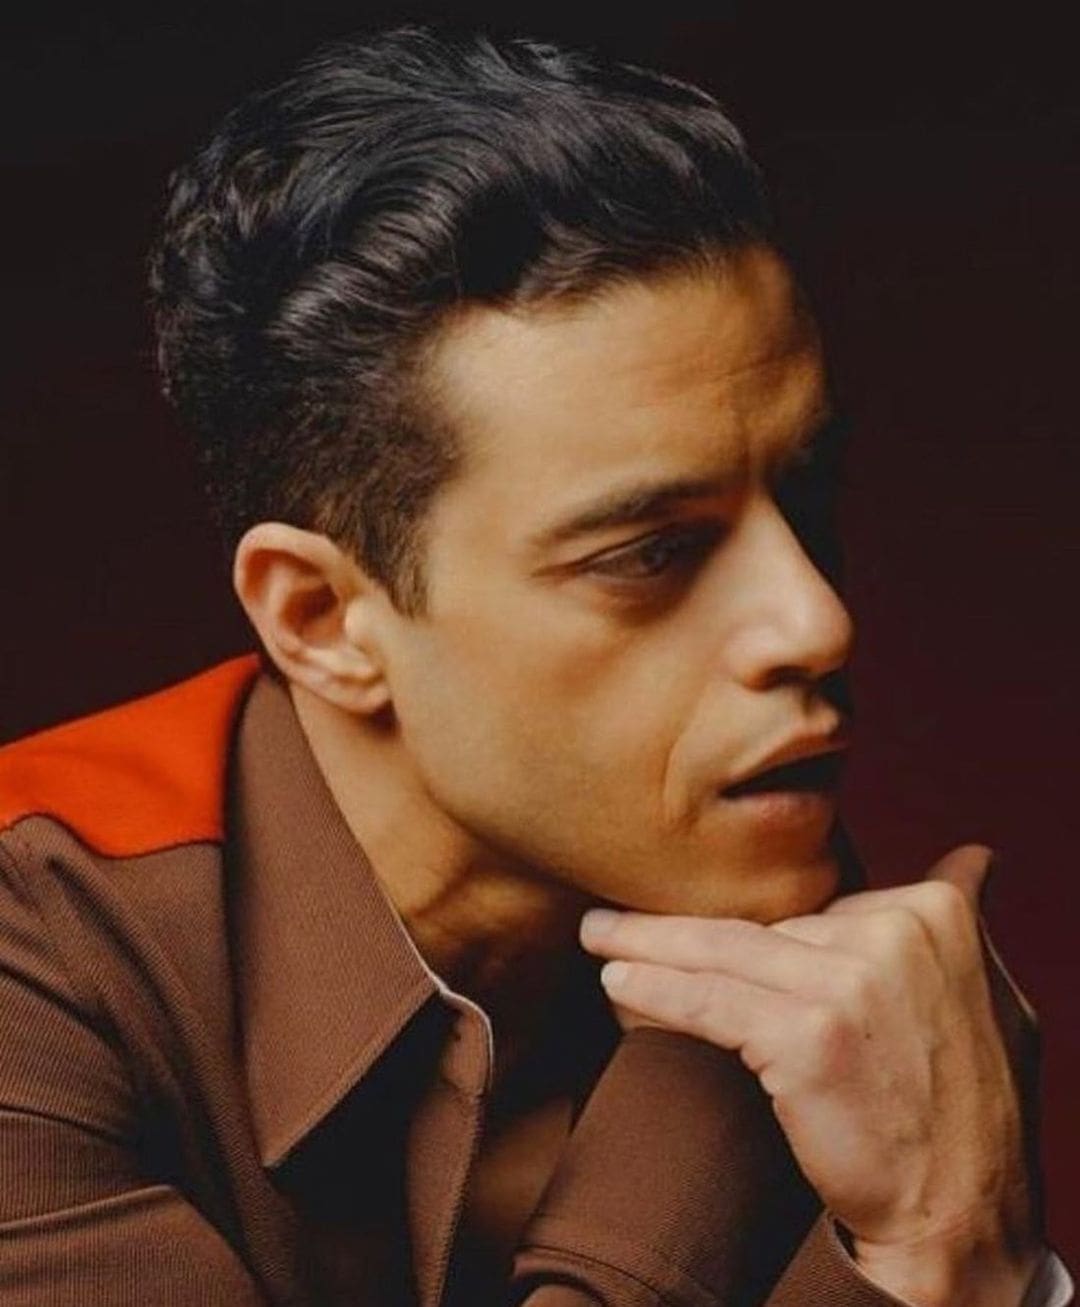 Rami Malek - Biography, Profile, Facts and Career